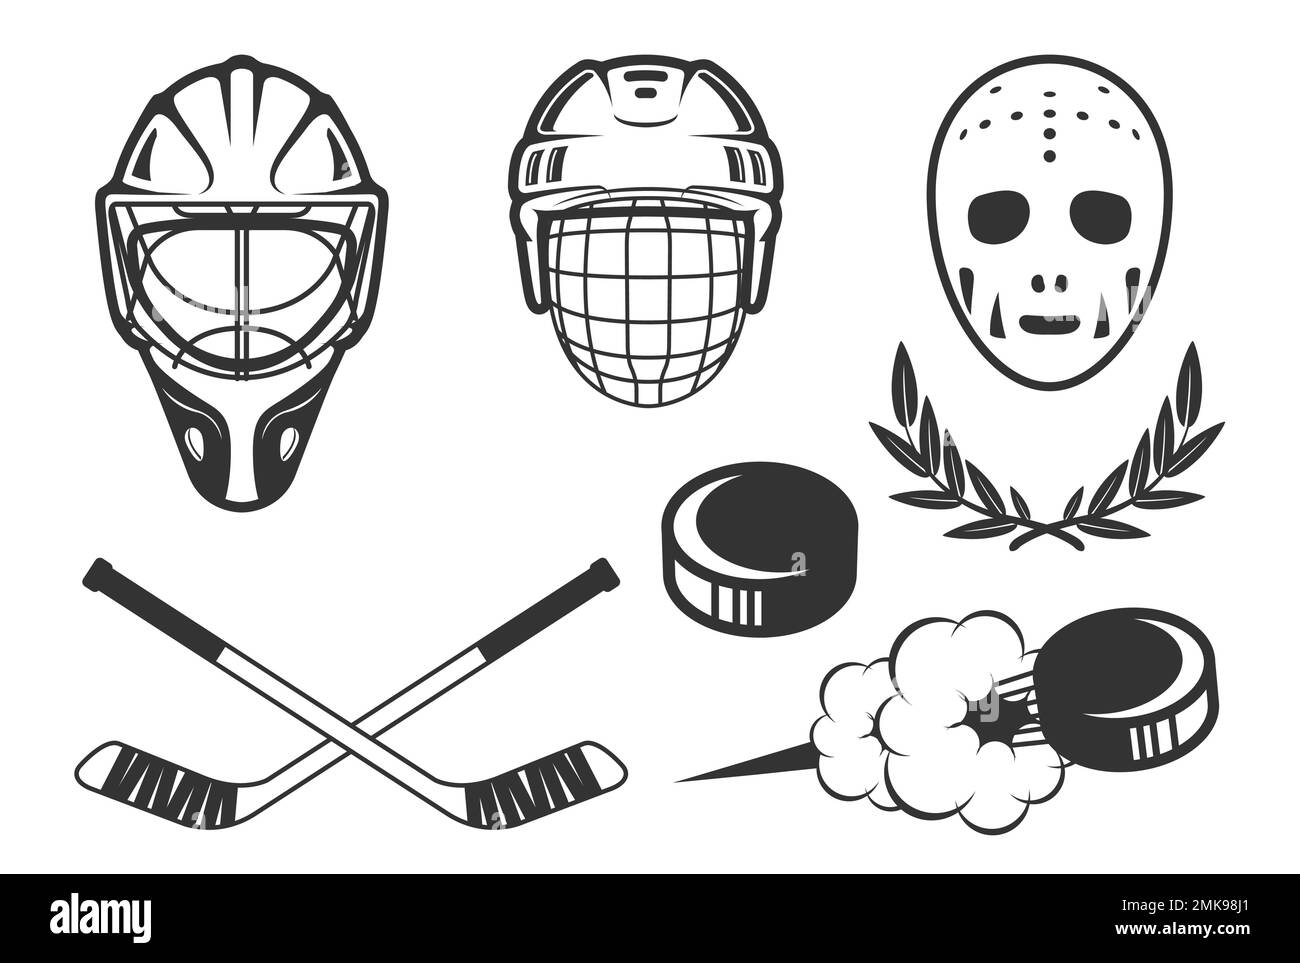 Louisville Blades – Vintage Ice Hockey